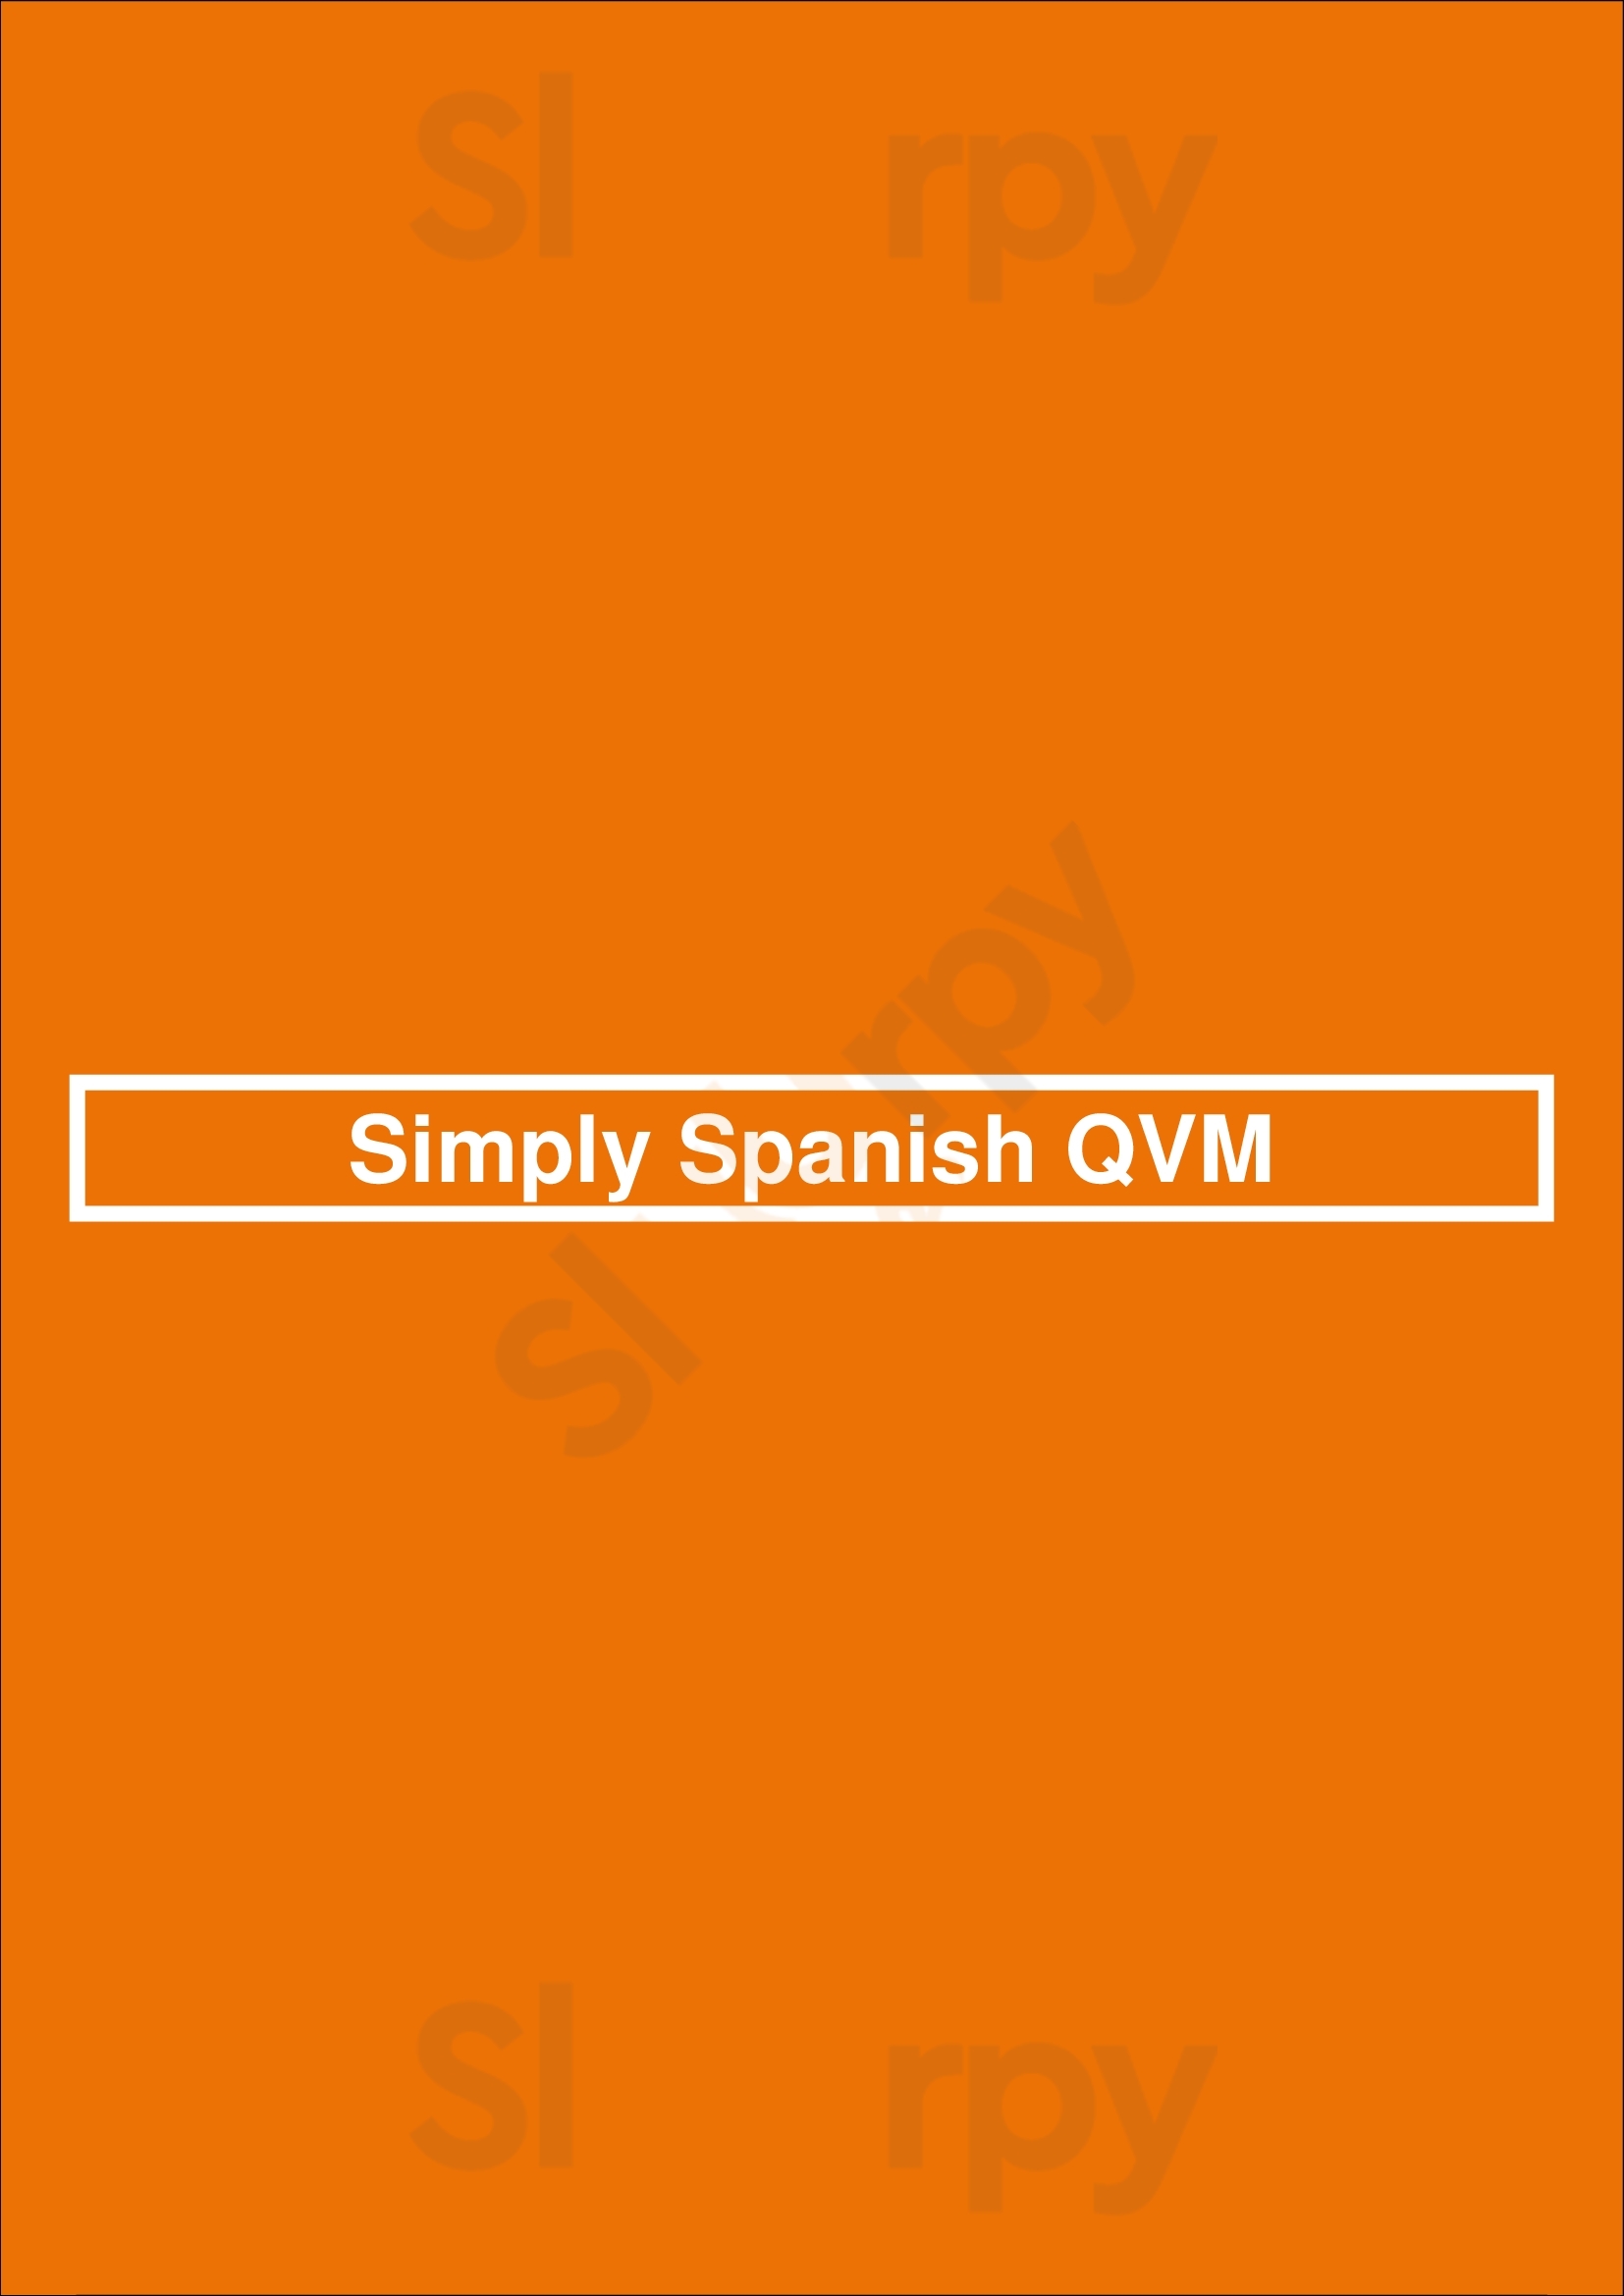 Simply Spanish Qvm Melbourne Menu - 1